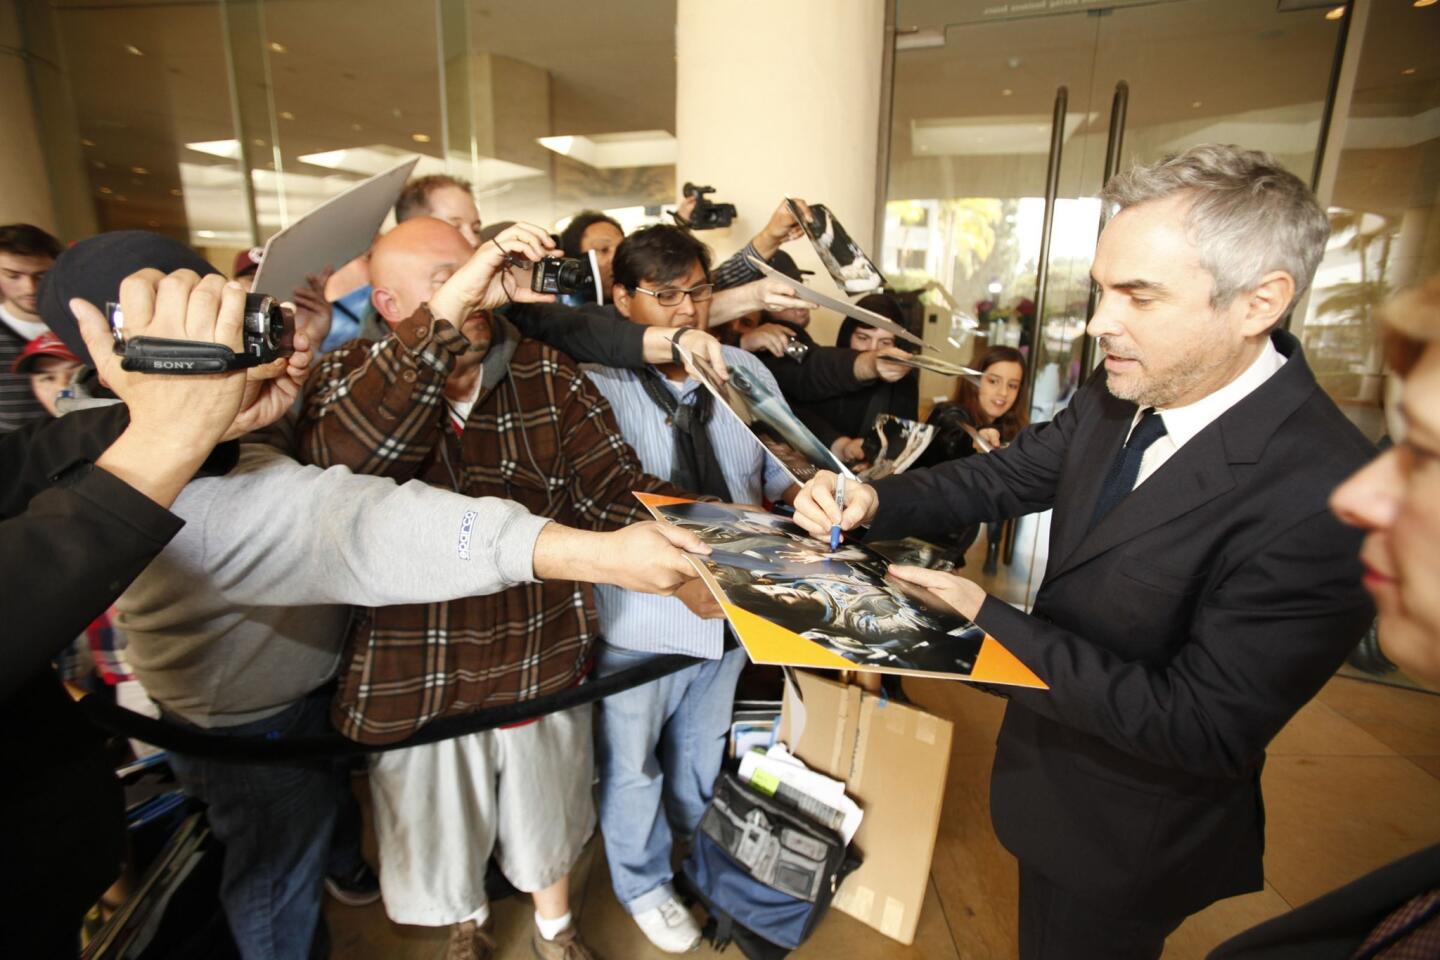 Alfonso Cuaron